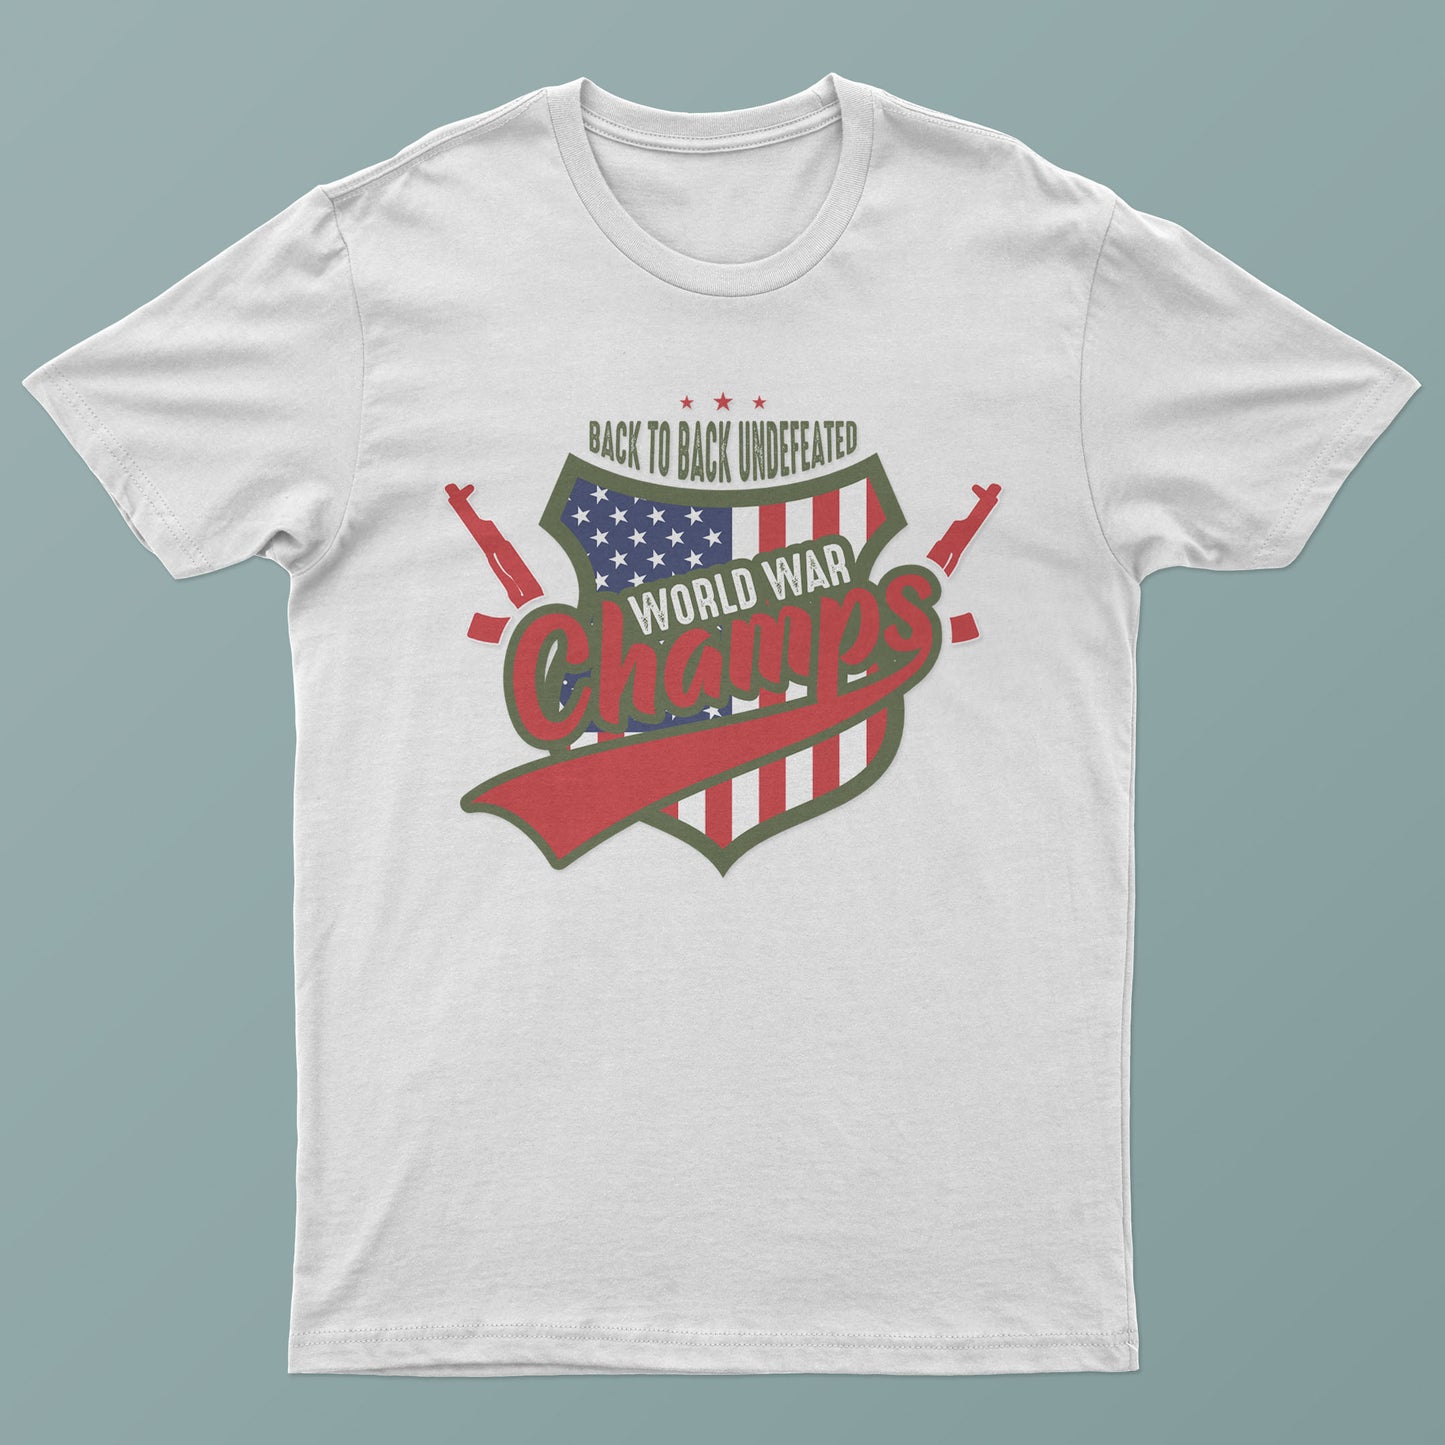 World War Champs Graphic Print Unisex T-Shirt: S-XXXL, Various Colors, Free Ship